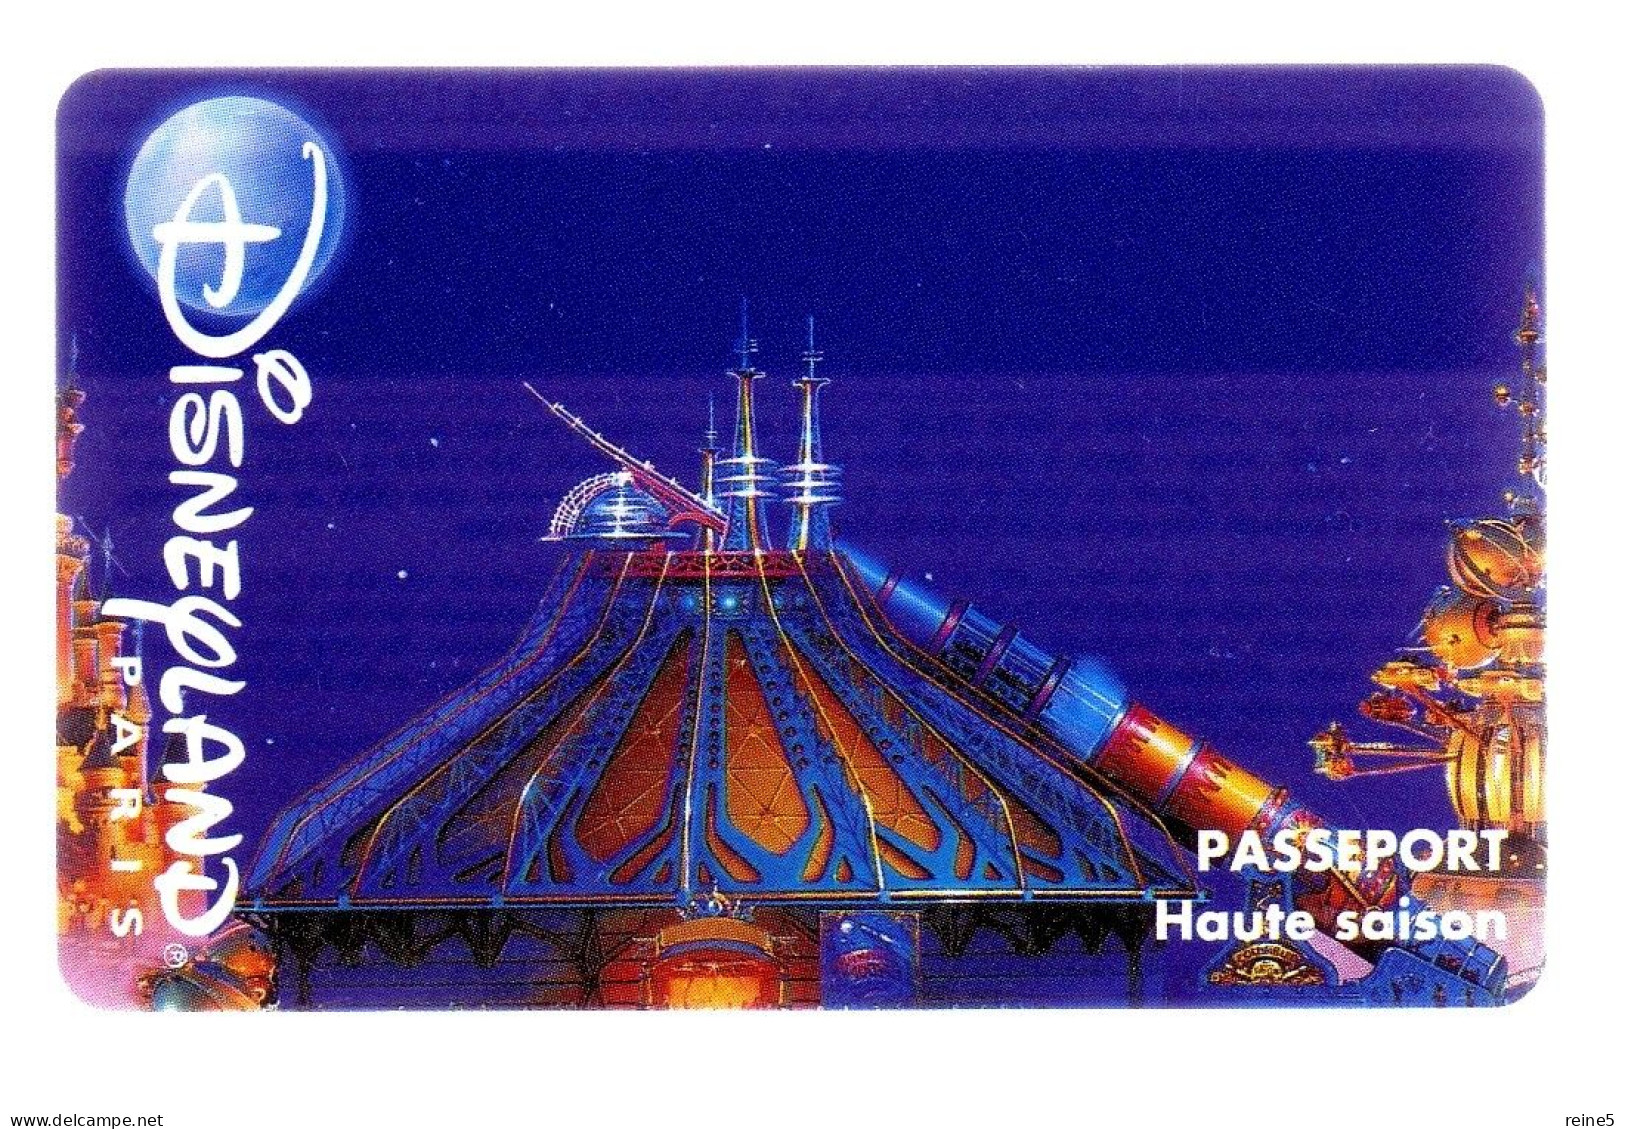 PASSEPORT HAUTE SAISON DISNEYLAND PARIS -TRES BON ETAT -REF-PASS DISNEY-15 - Passeports Disney